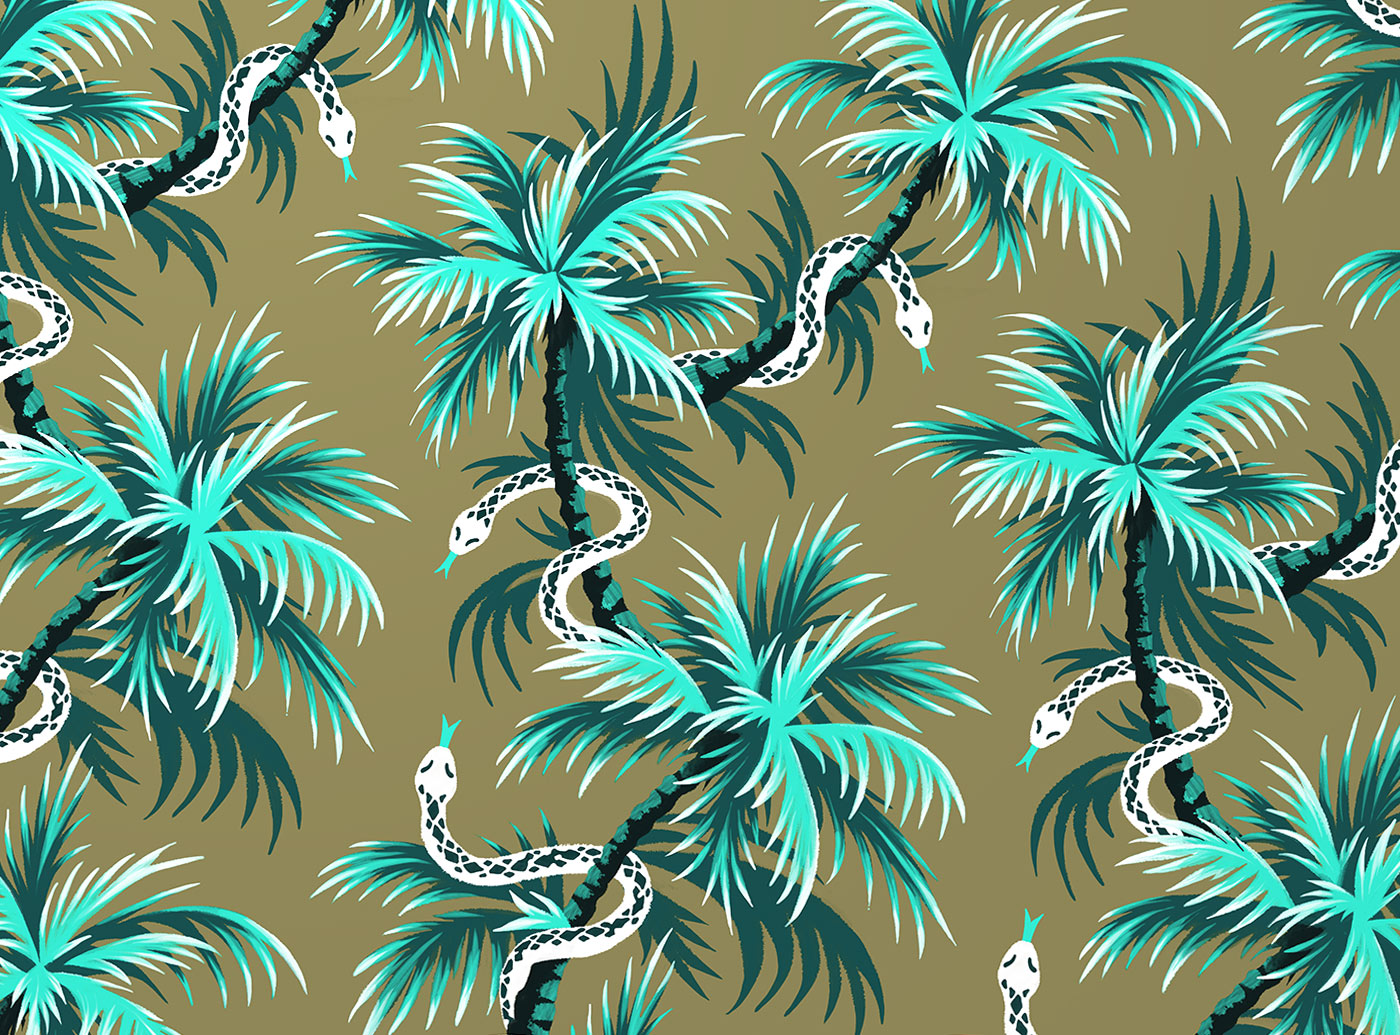 Snake Palms tropical illustration by Andrea Muller